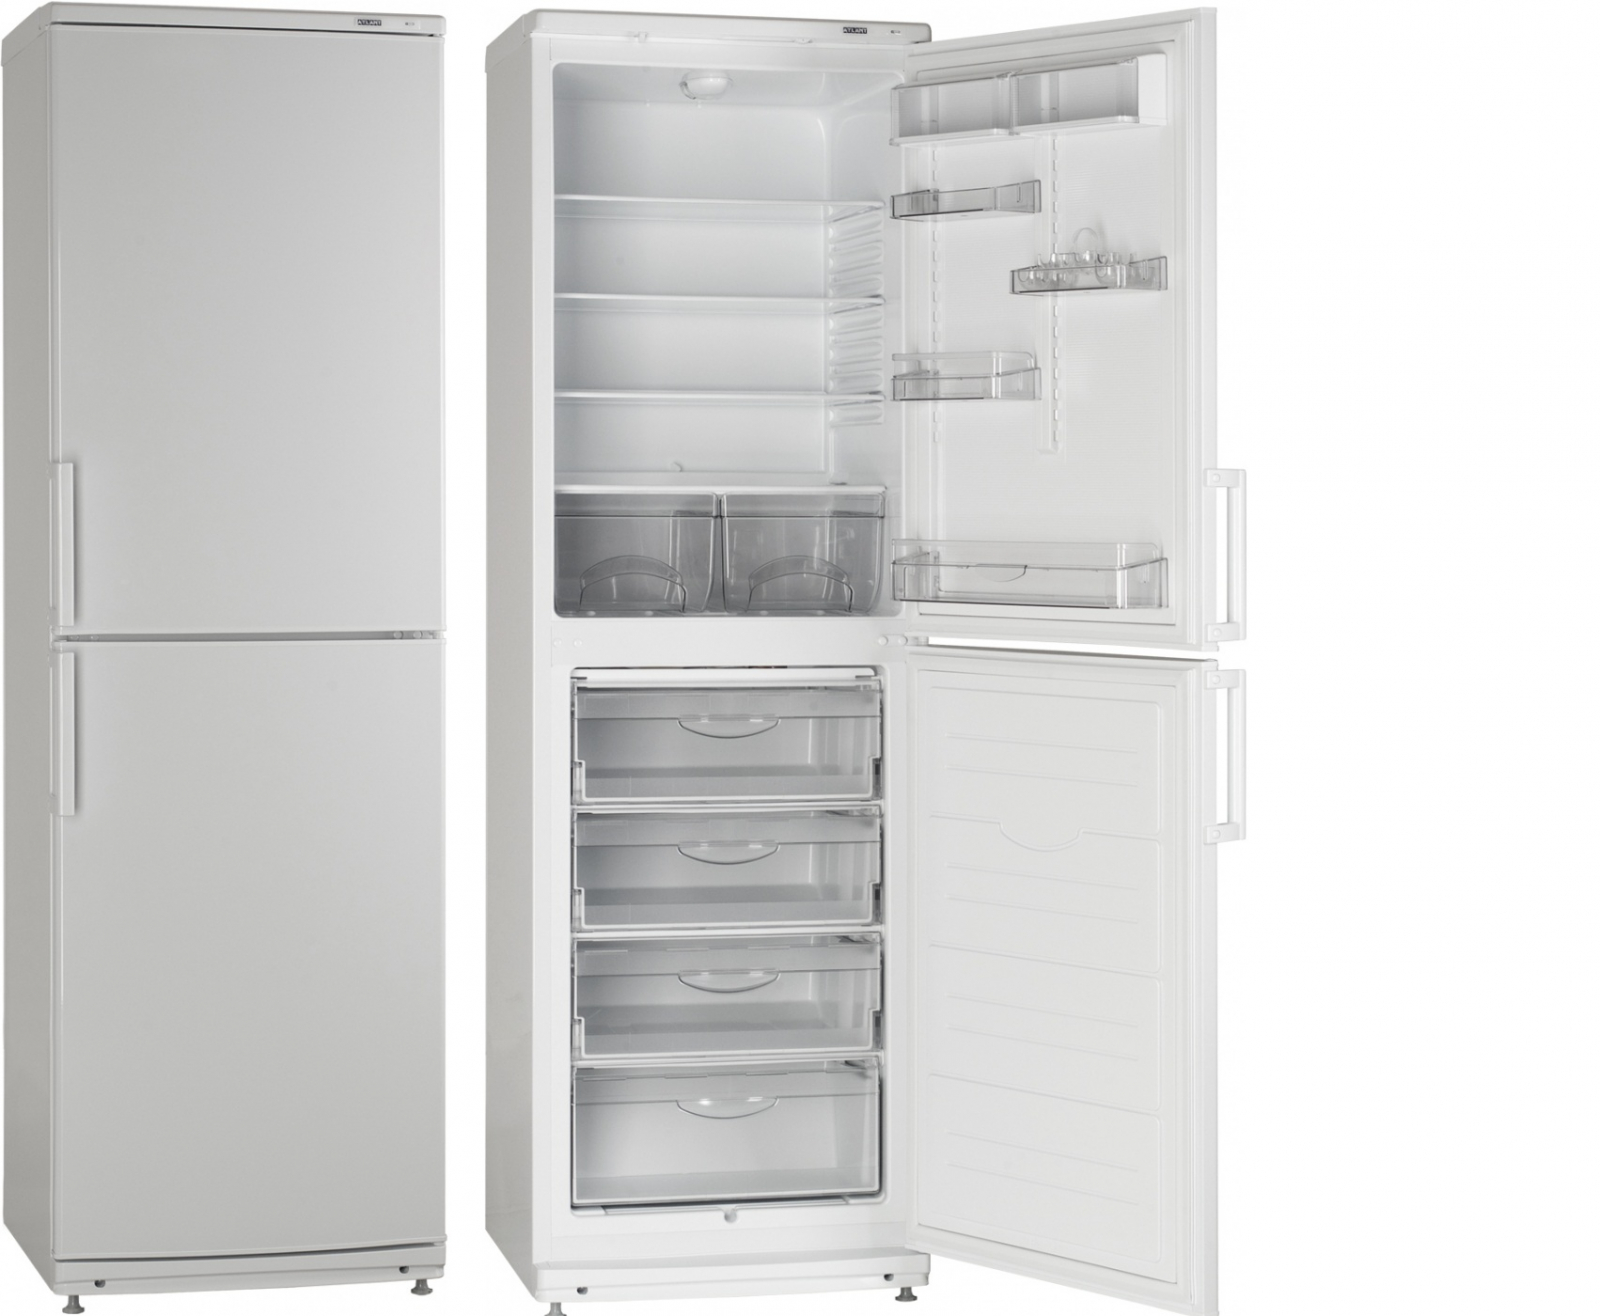 холодильник atlant xm 4023-000, купить в Красноярске холодильник atlant xm 4023-000,  купить в Красноярске дешево холодильник atlant xm 4023-000, купить в Красноярске минимальной цене холодильник atlant xm 4023-000